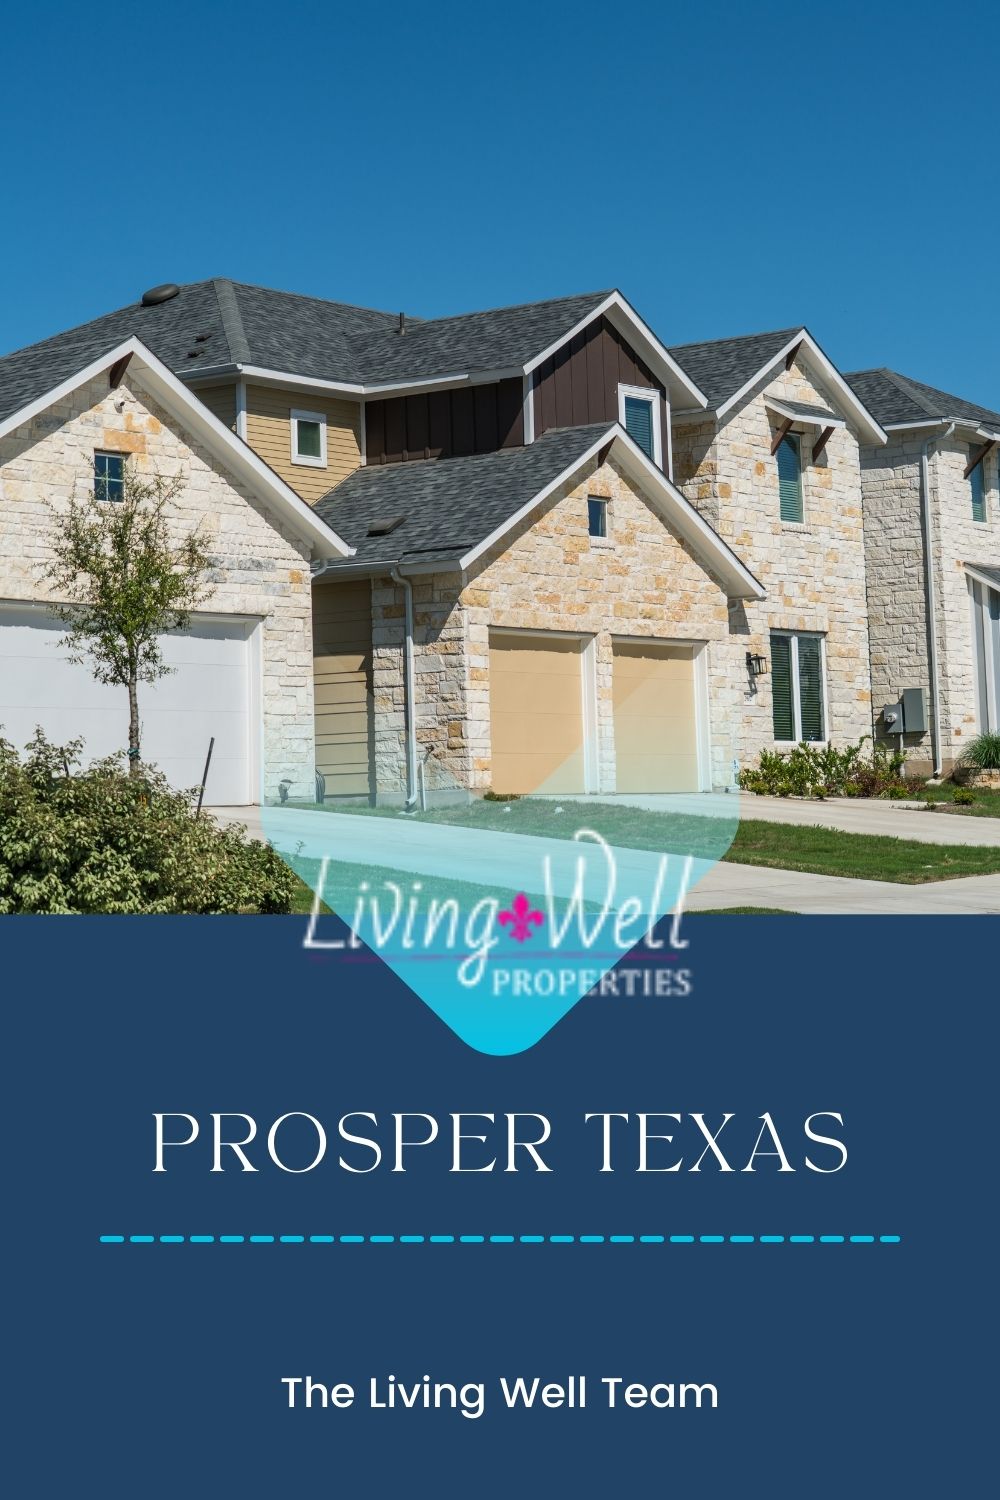 Homes for Sale in Prosper Texas